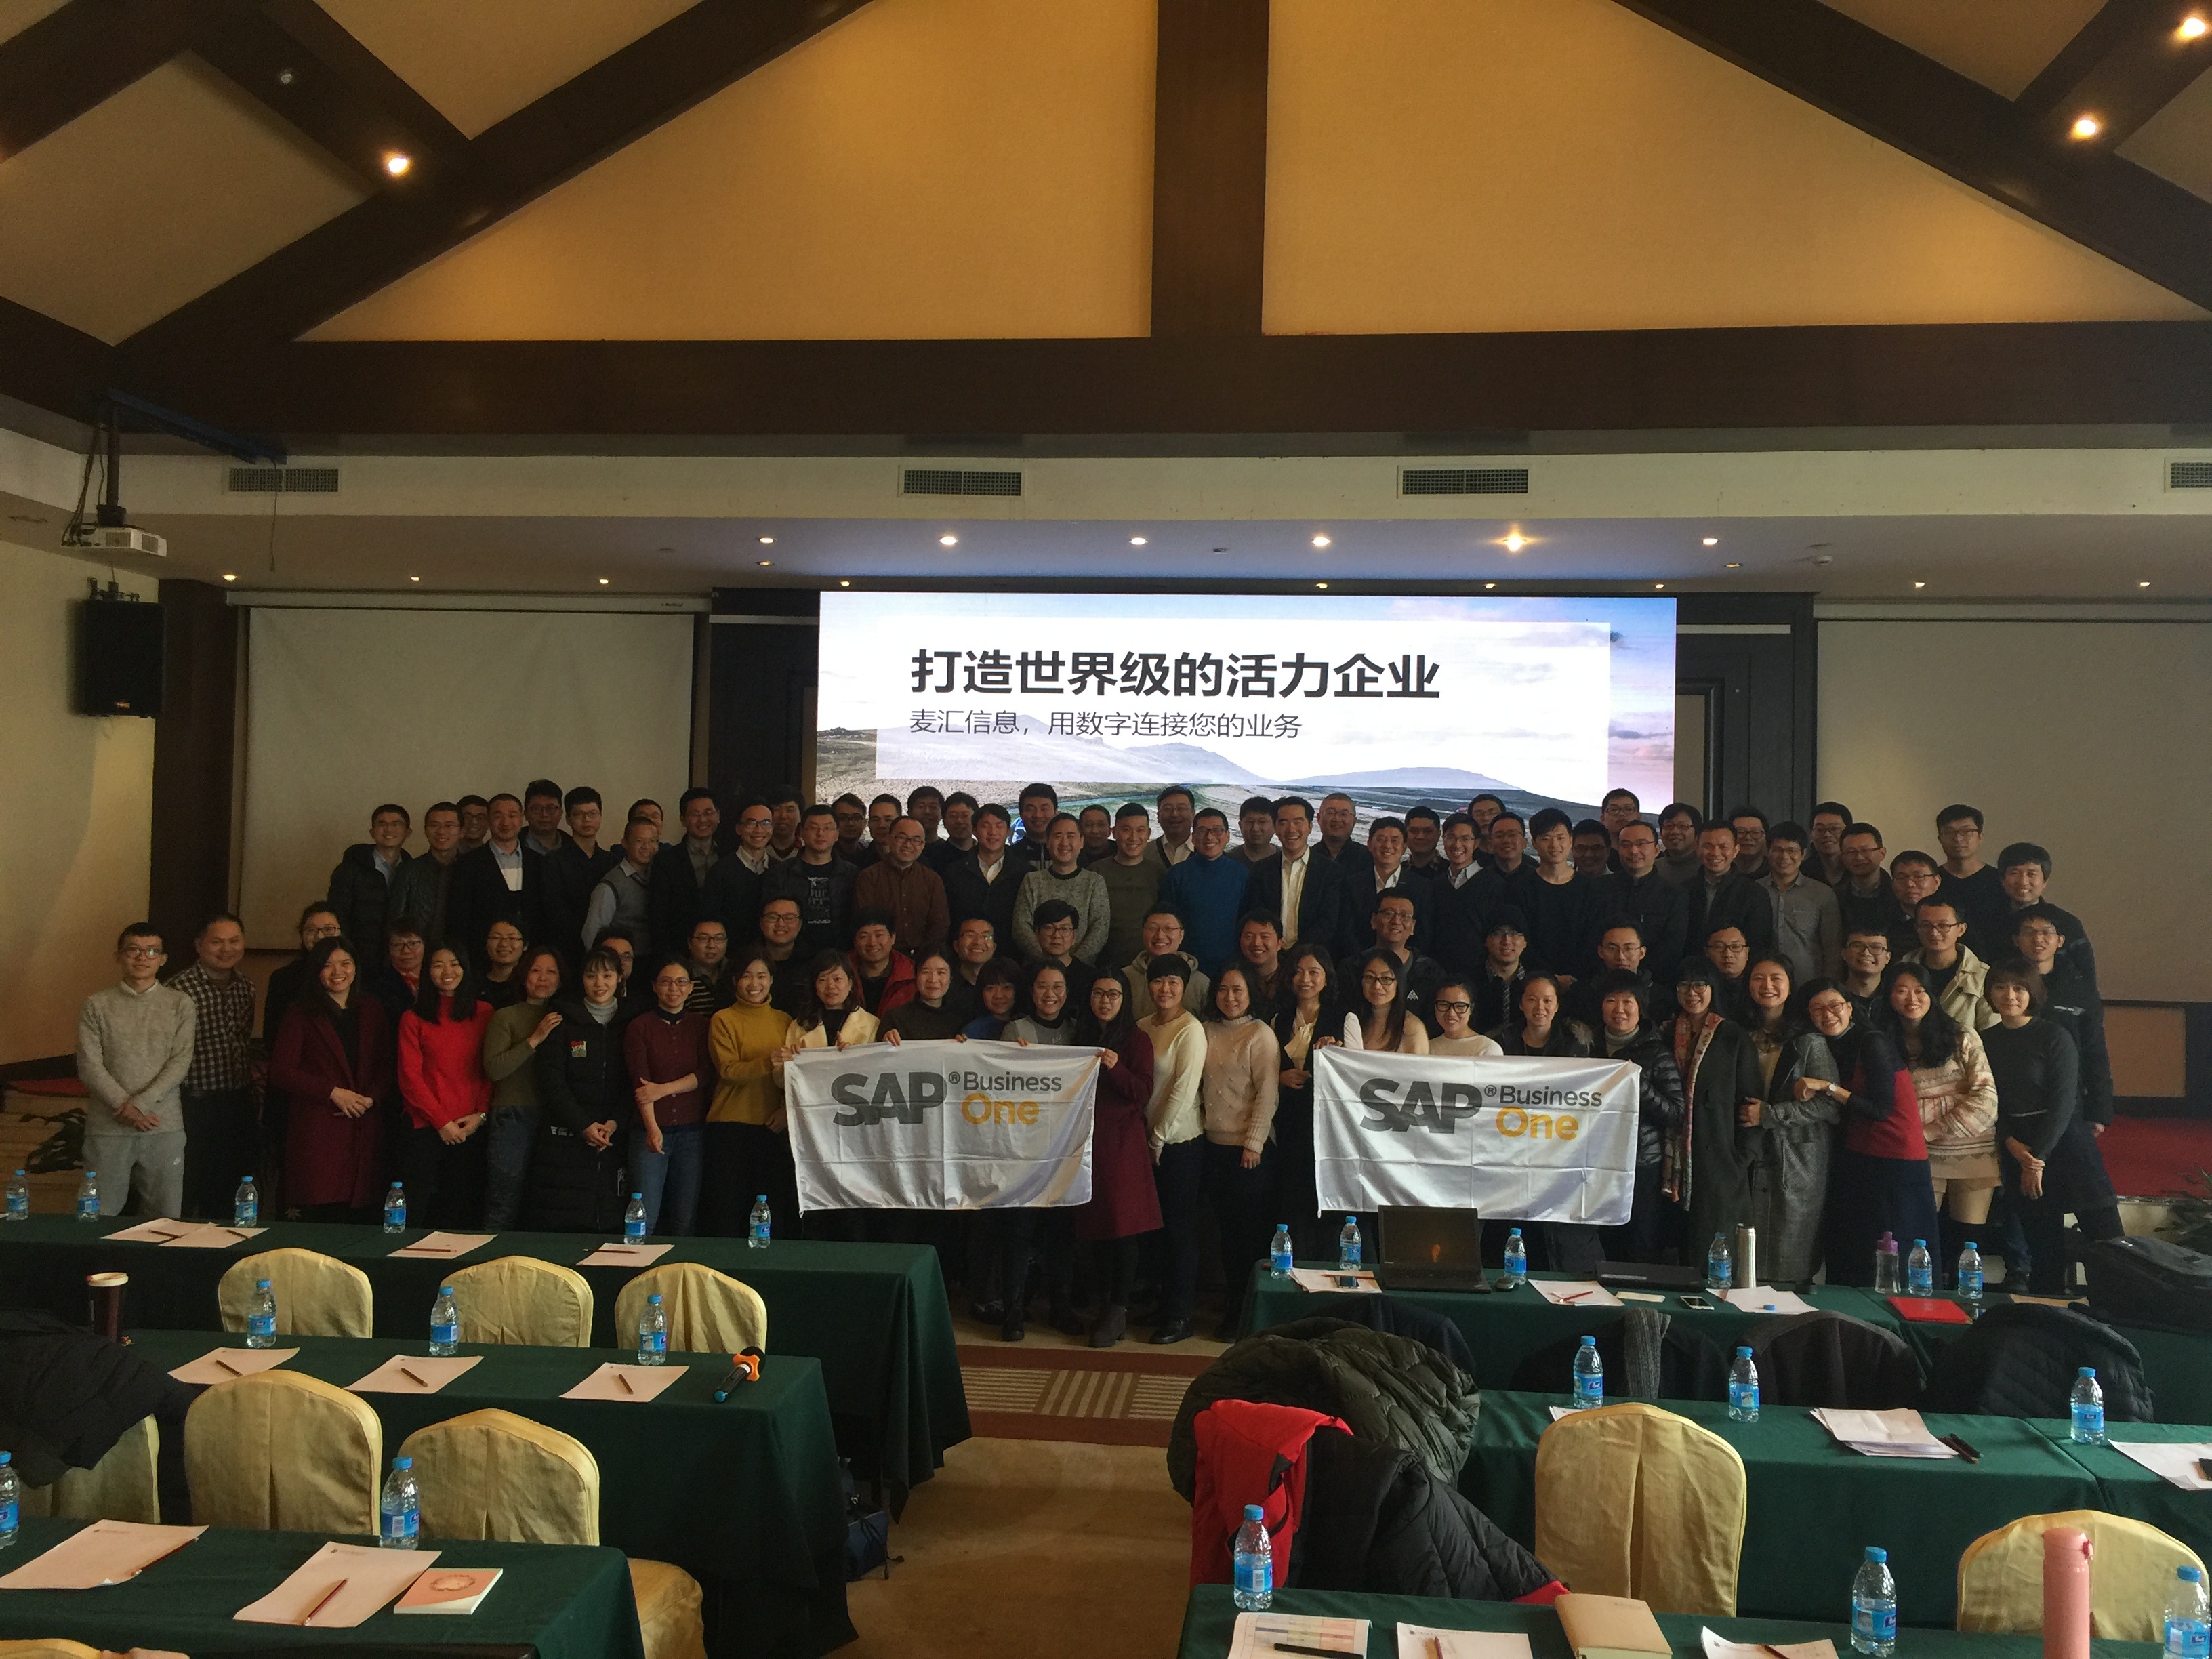 MTC Annual Meeting in 2018